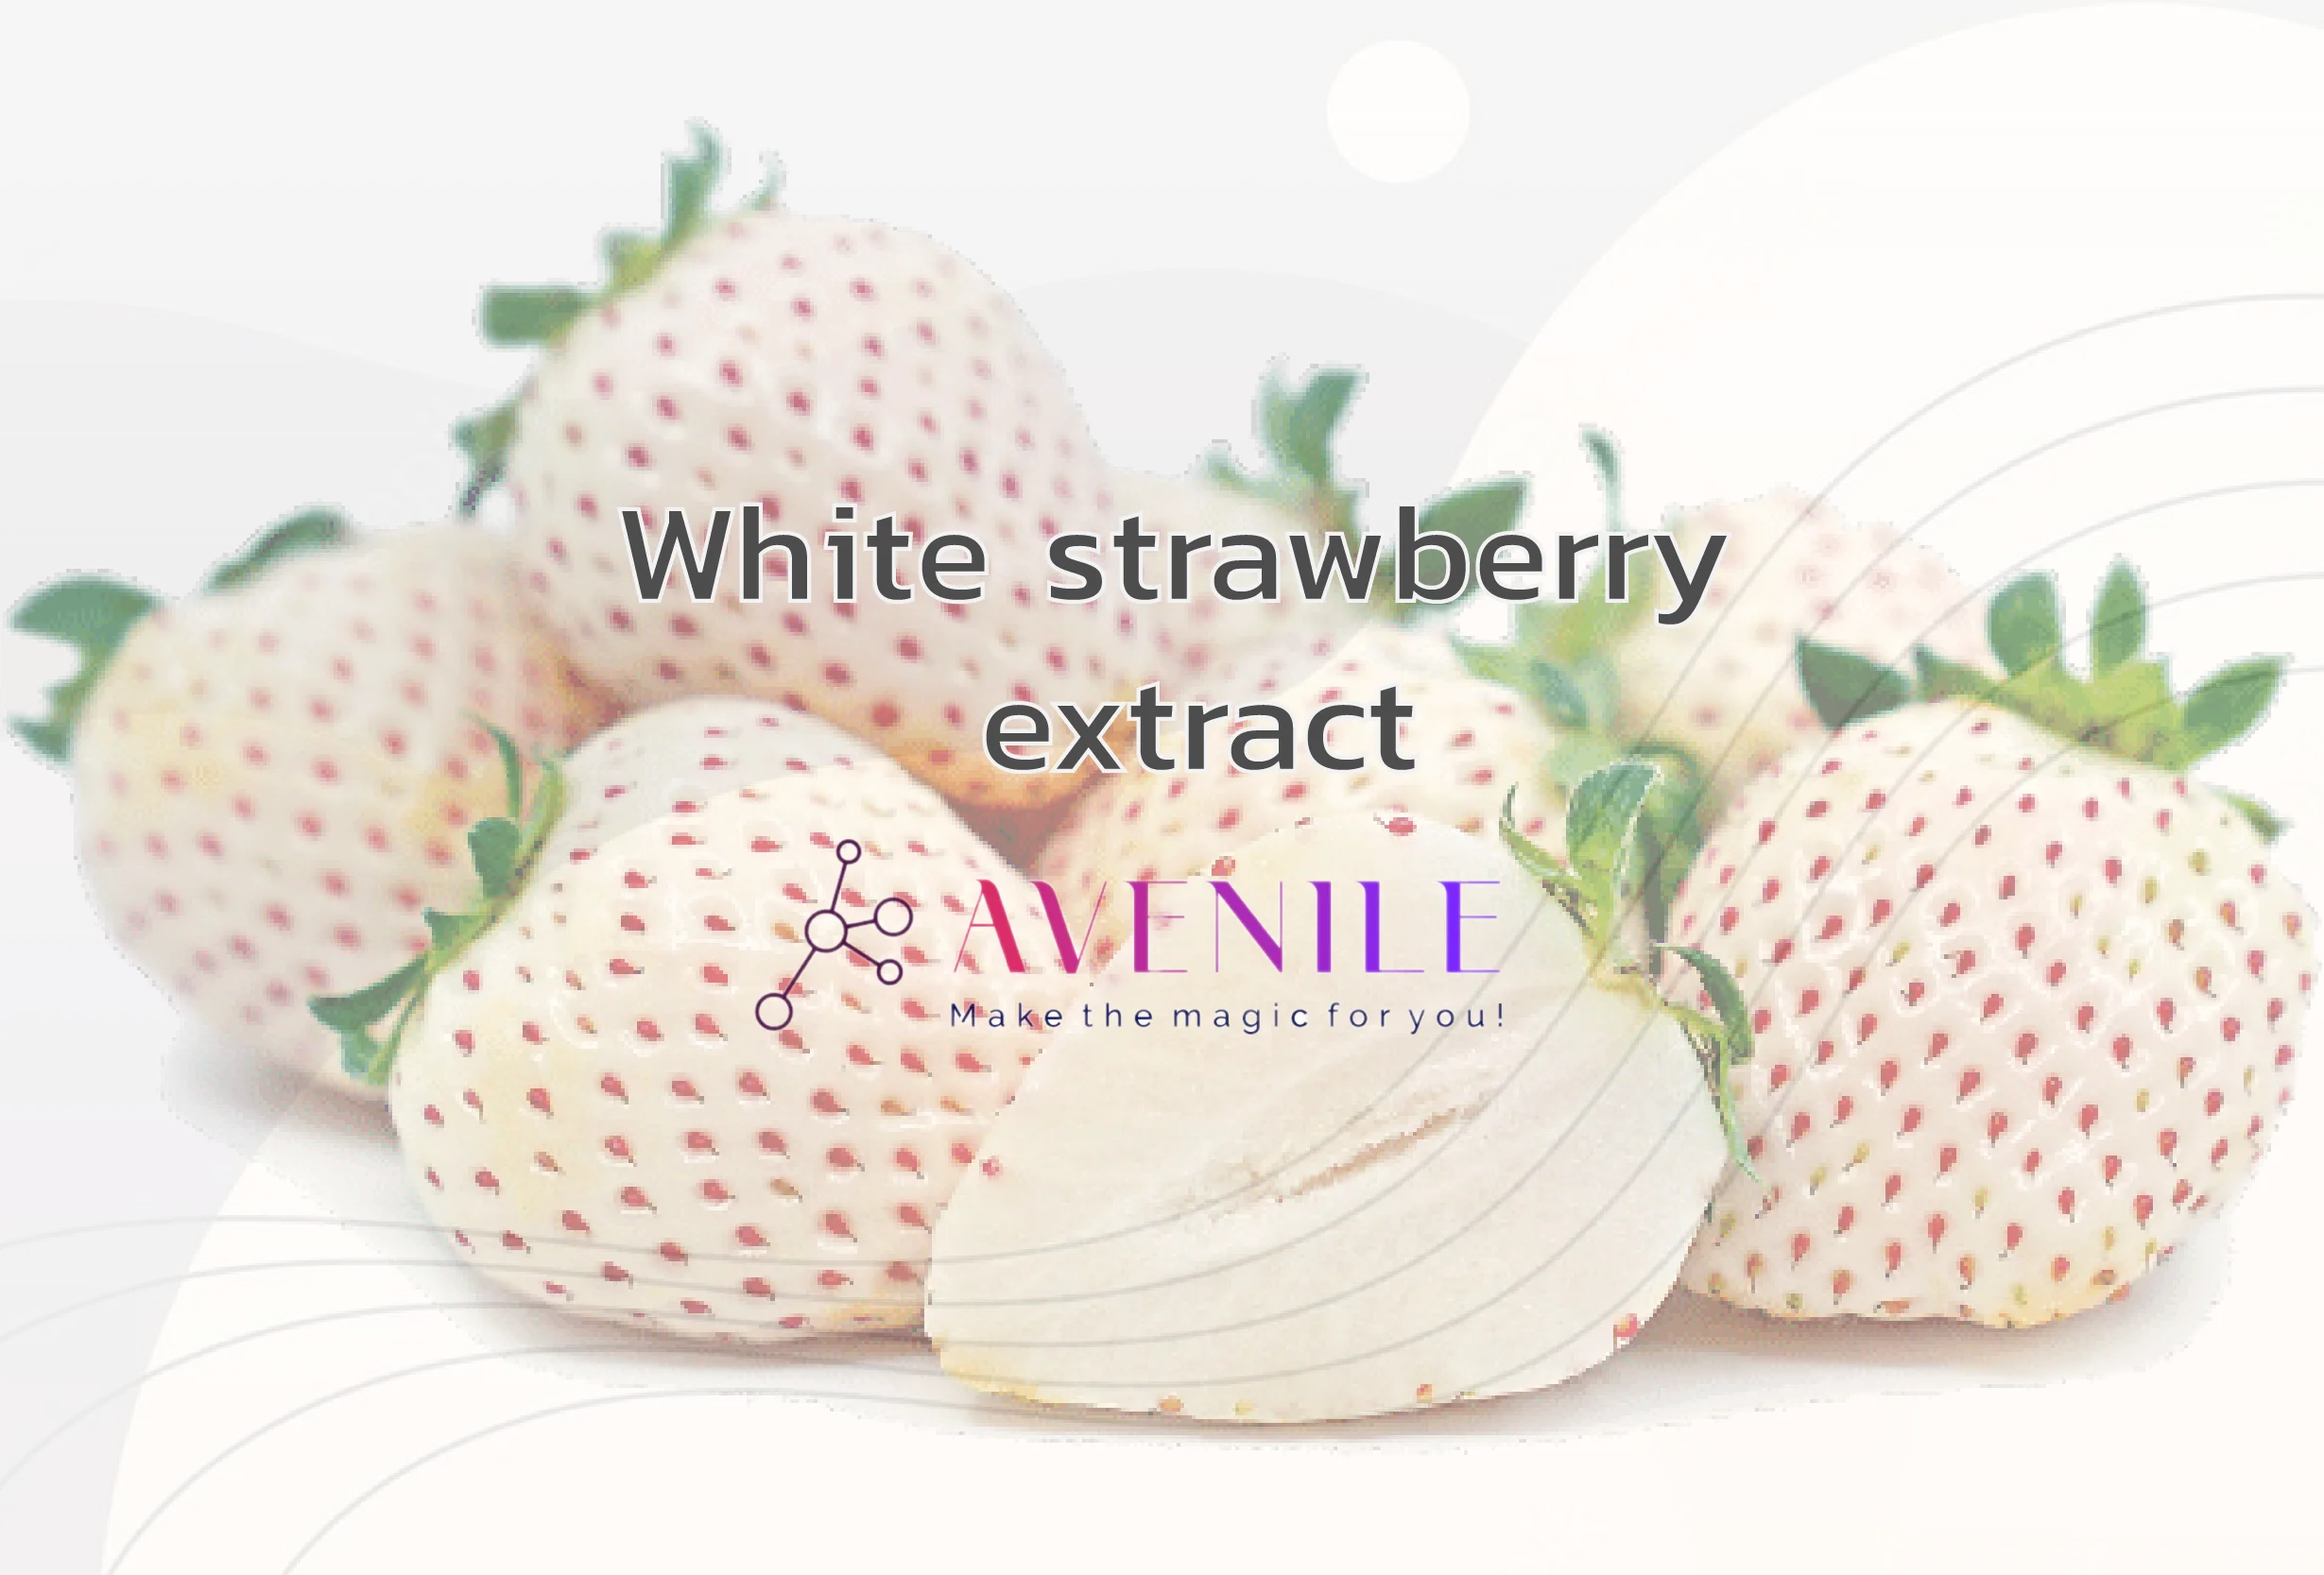 Avenile - White strawberry extract